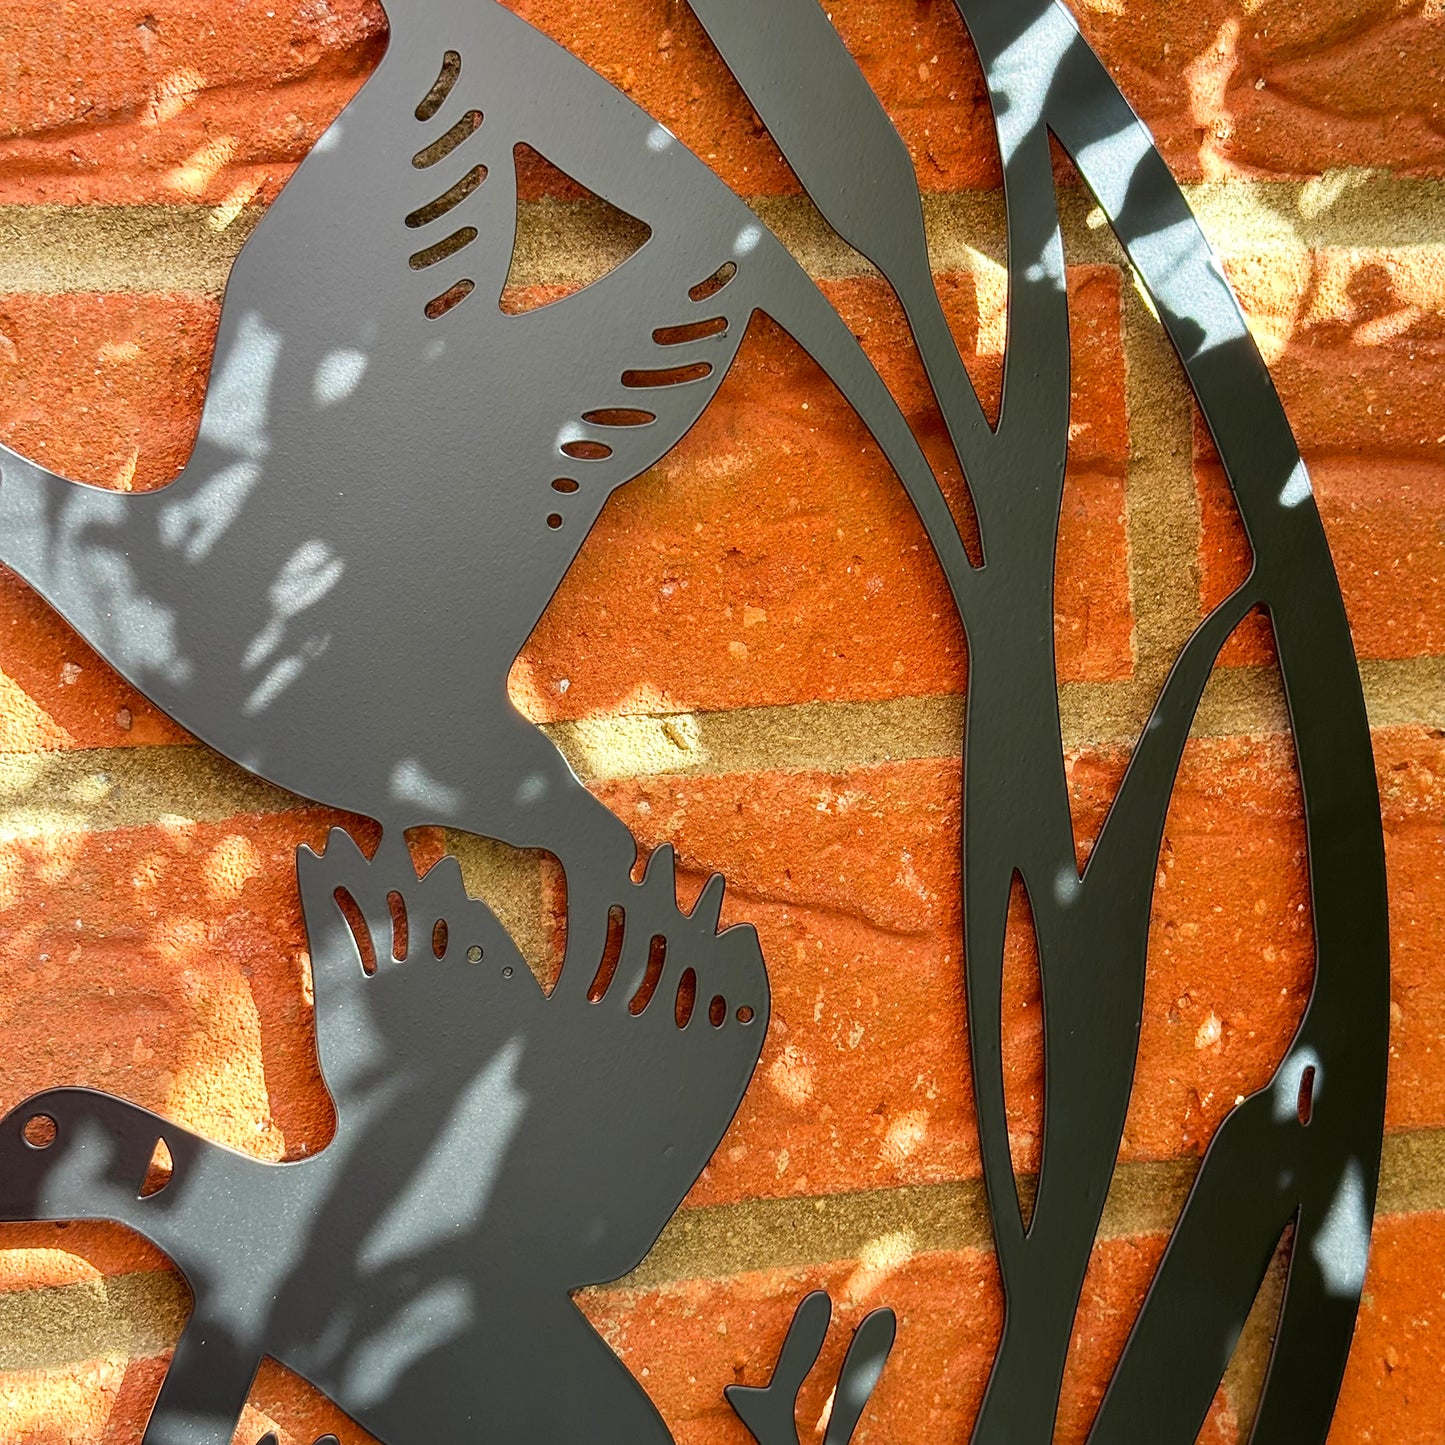 Drei fliegende Enten Silhouette Garten Wandkunst